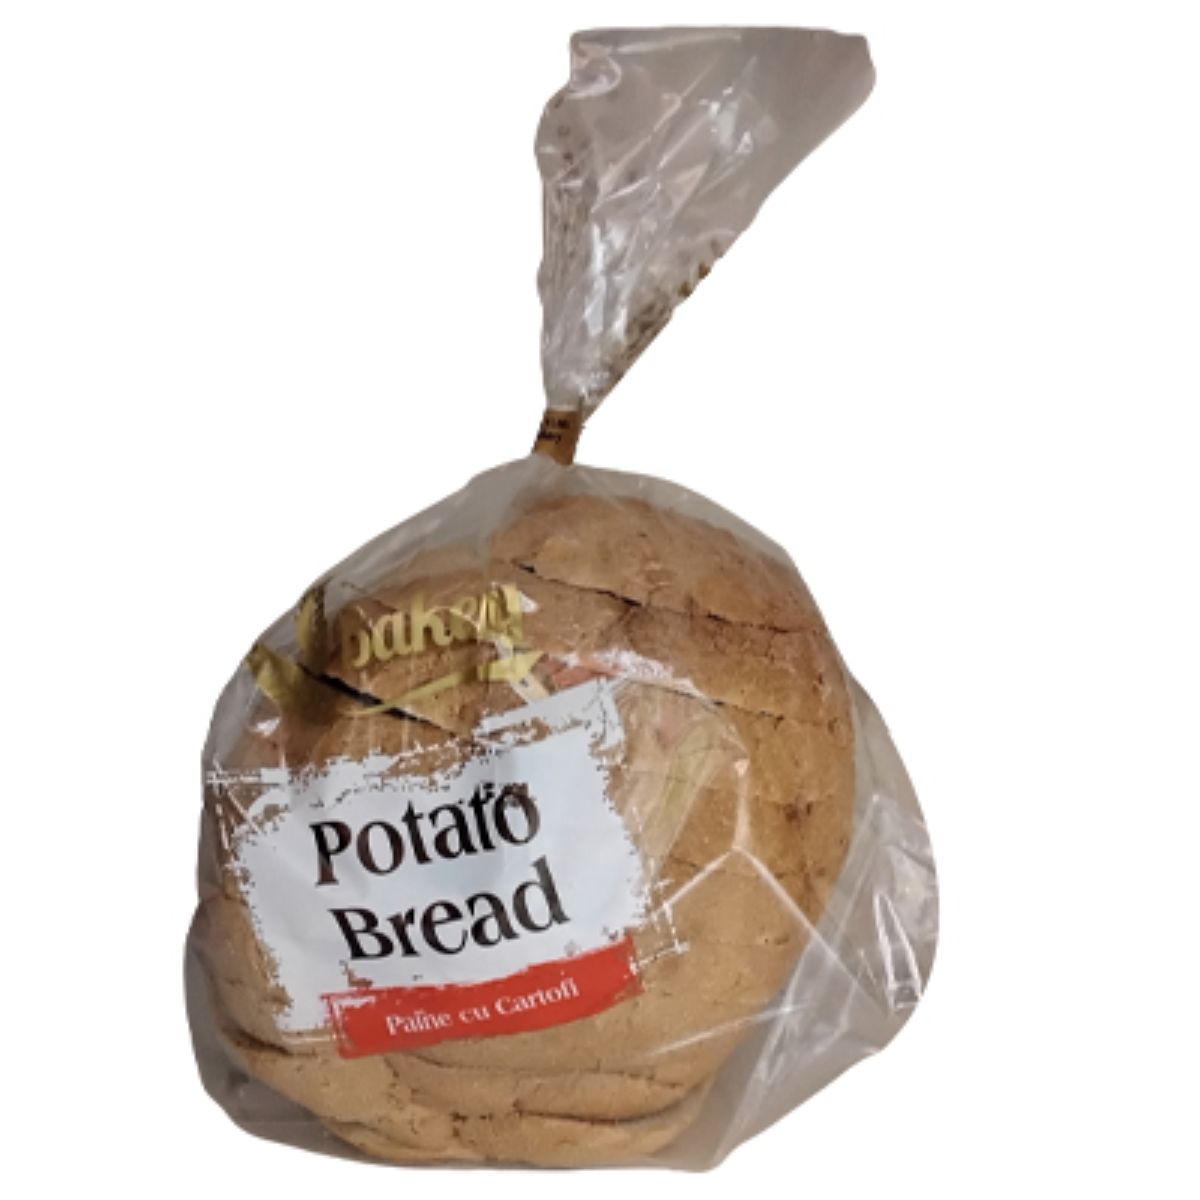 A bag of Oz Bakery - Potato Bread - 750g on a white background.